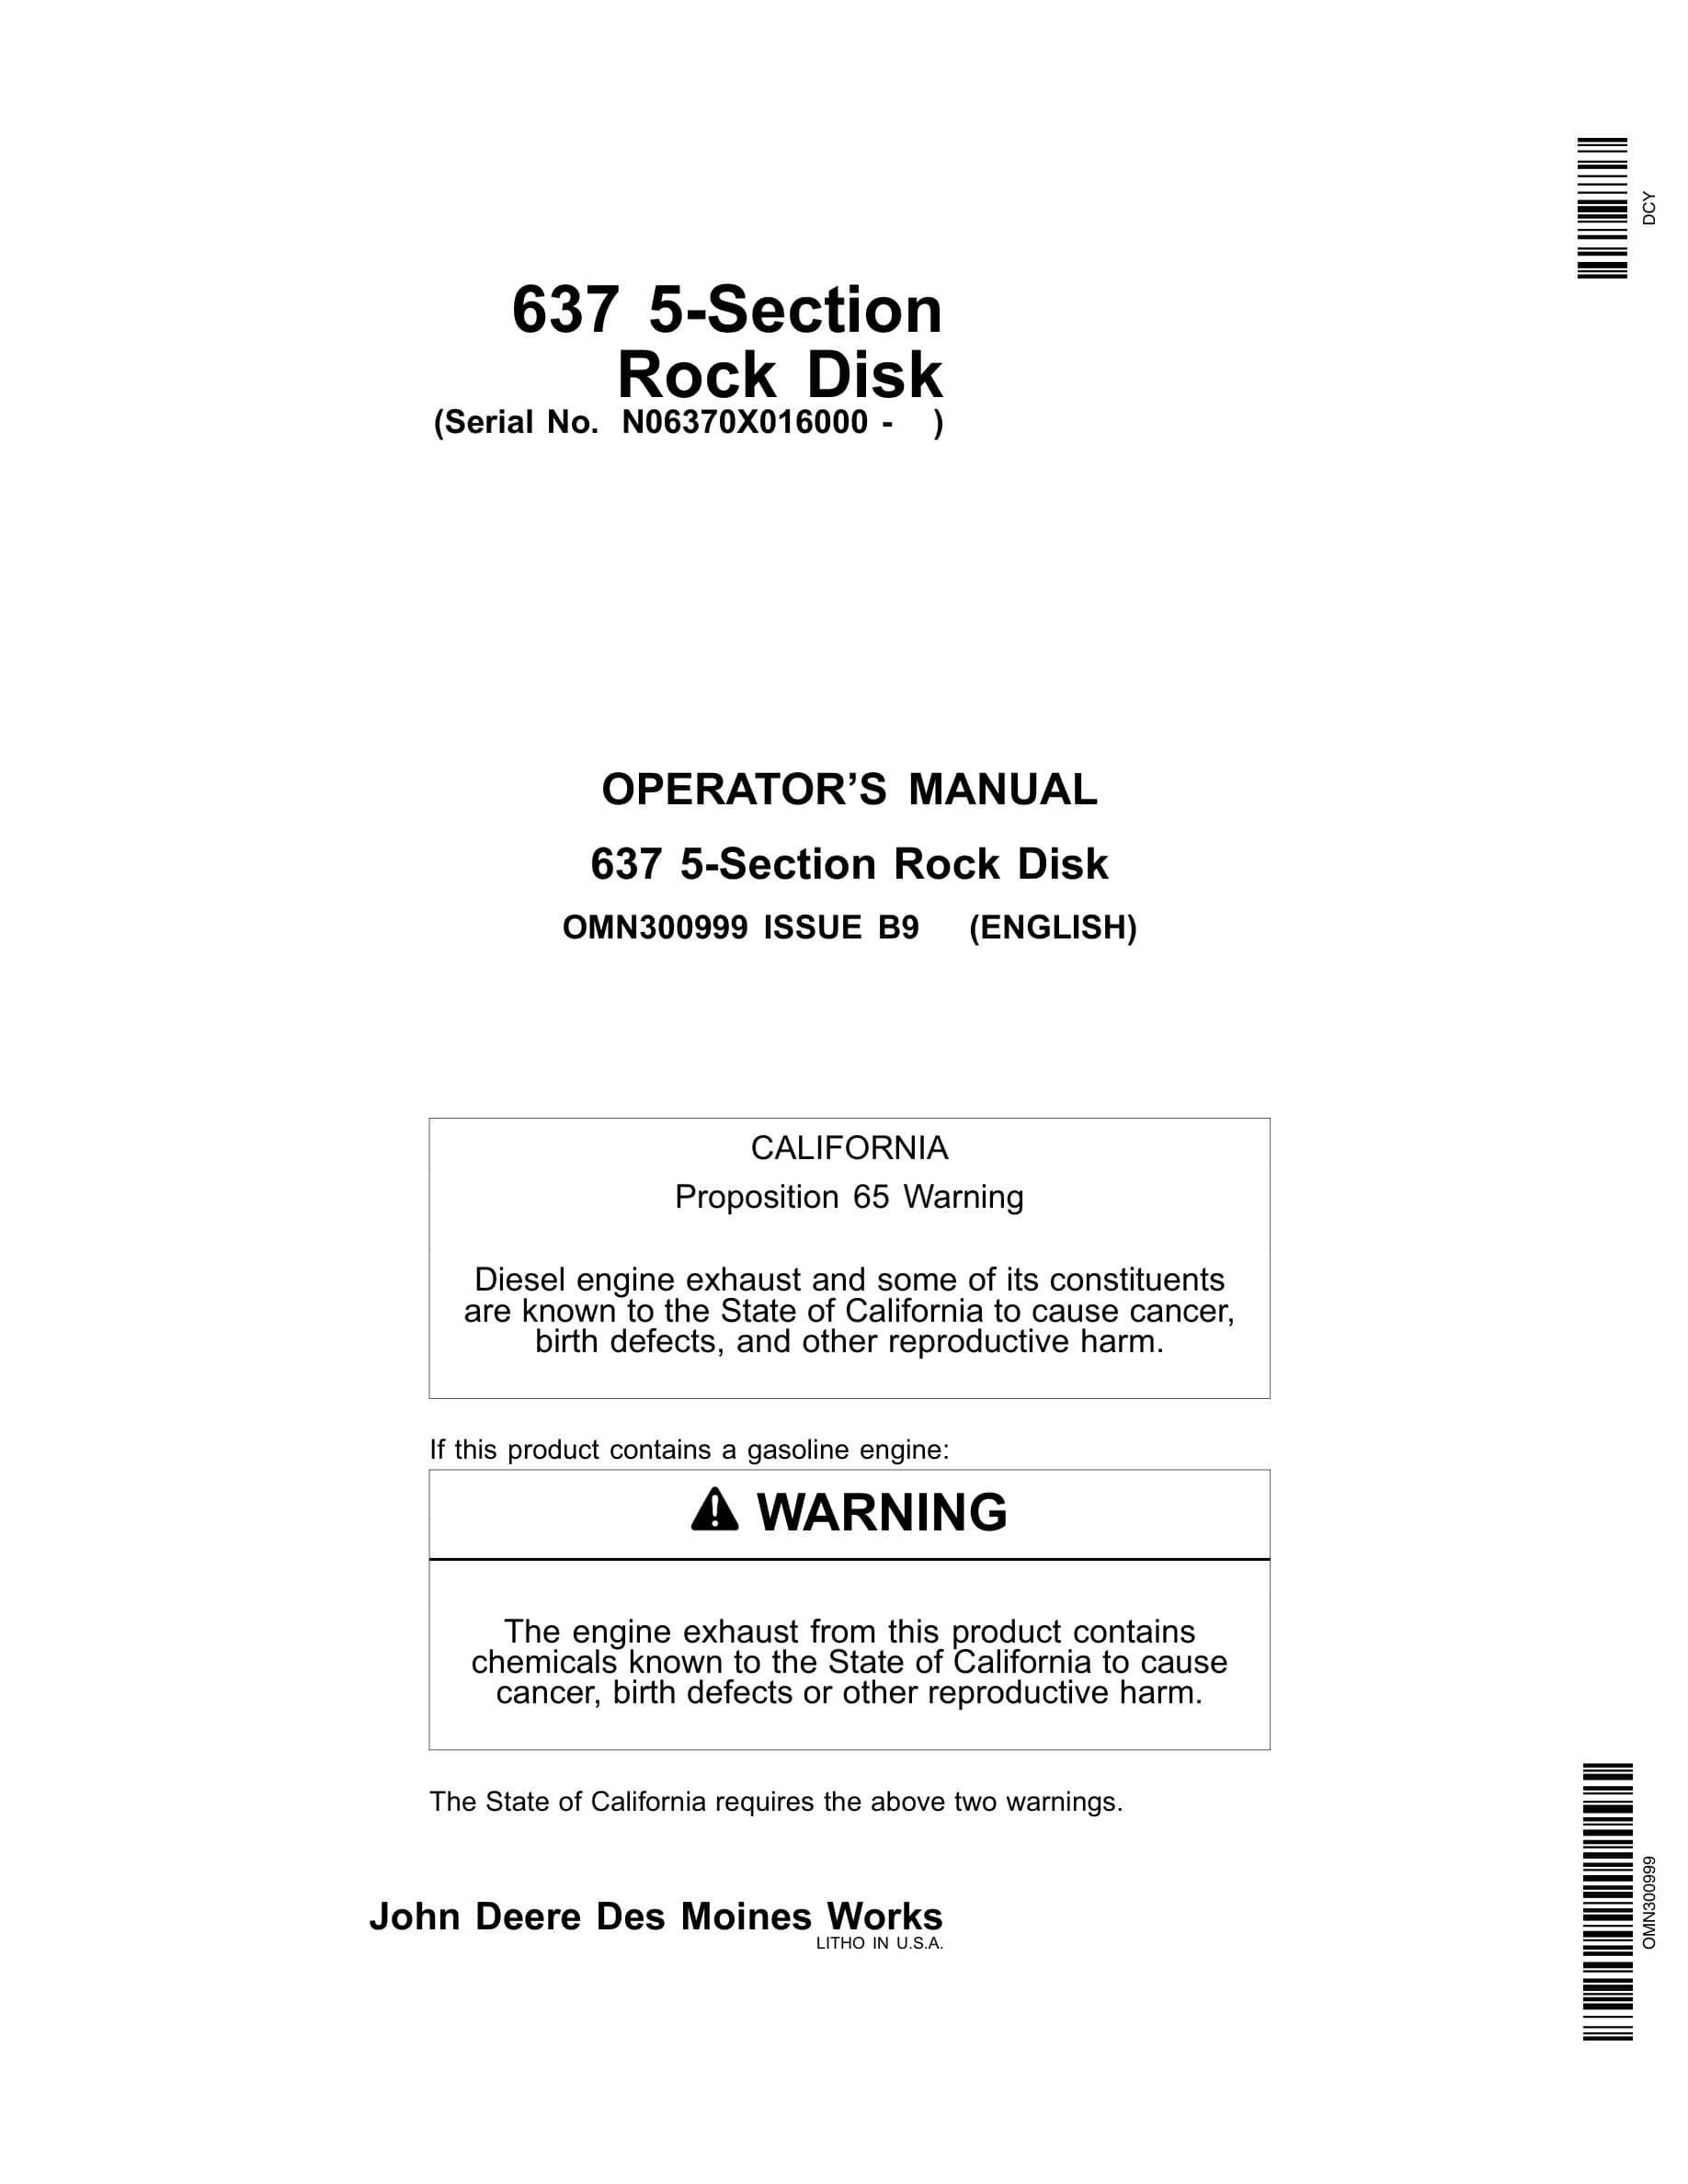 John Deere 637 5-Section Rock Disks Operator Manual OMN300999-1